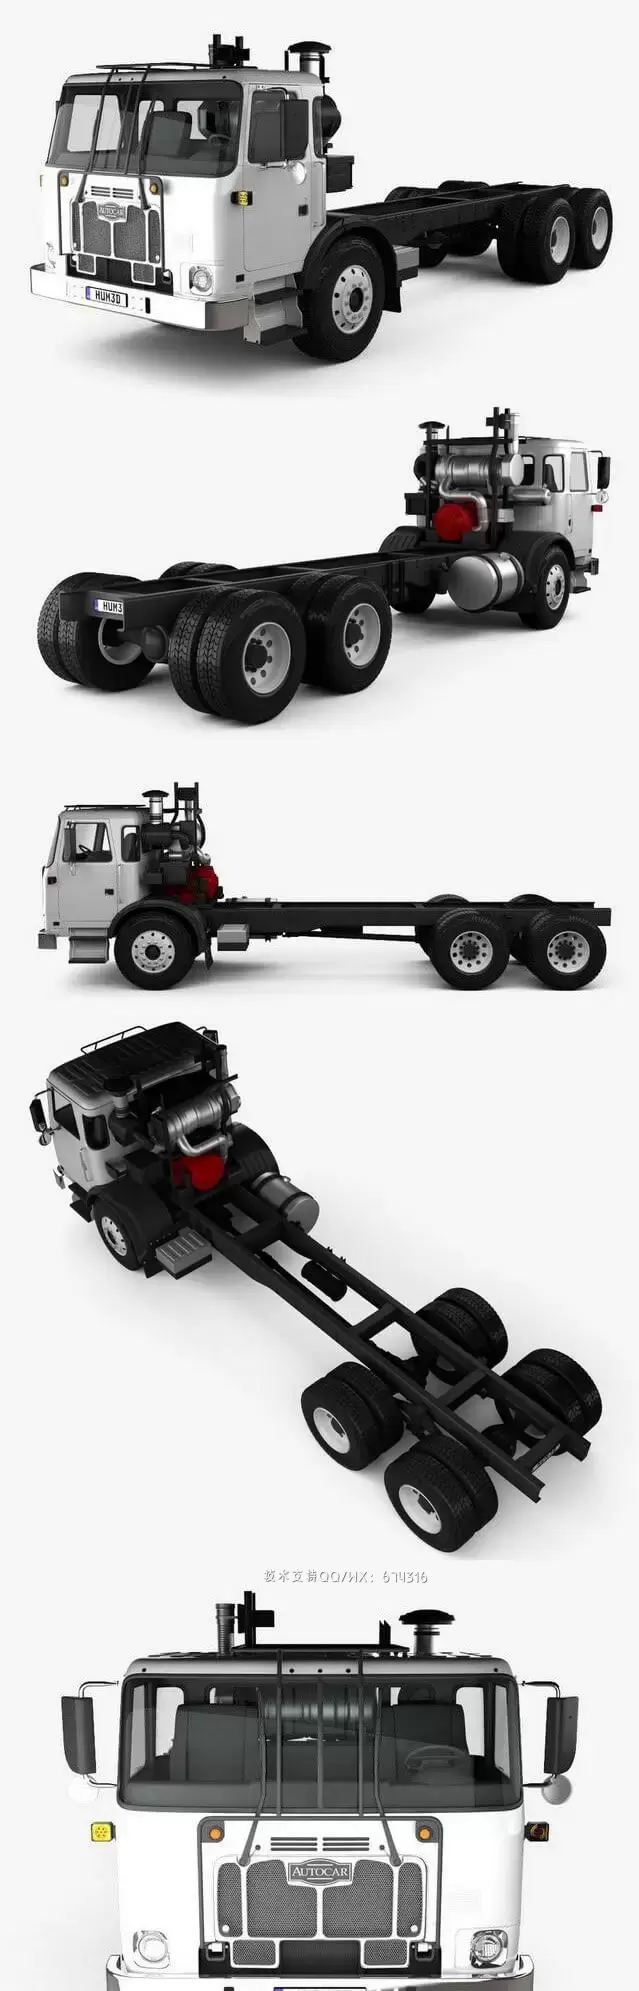 奥托 Autocar ACX Chassis 卡车 2021 货车3D模型下载 (MAX,3DS,FBX,OBJ,C4D,LWO,TEX)免费下载